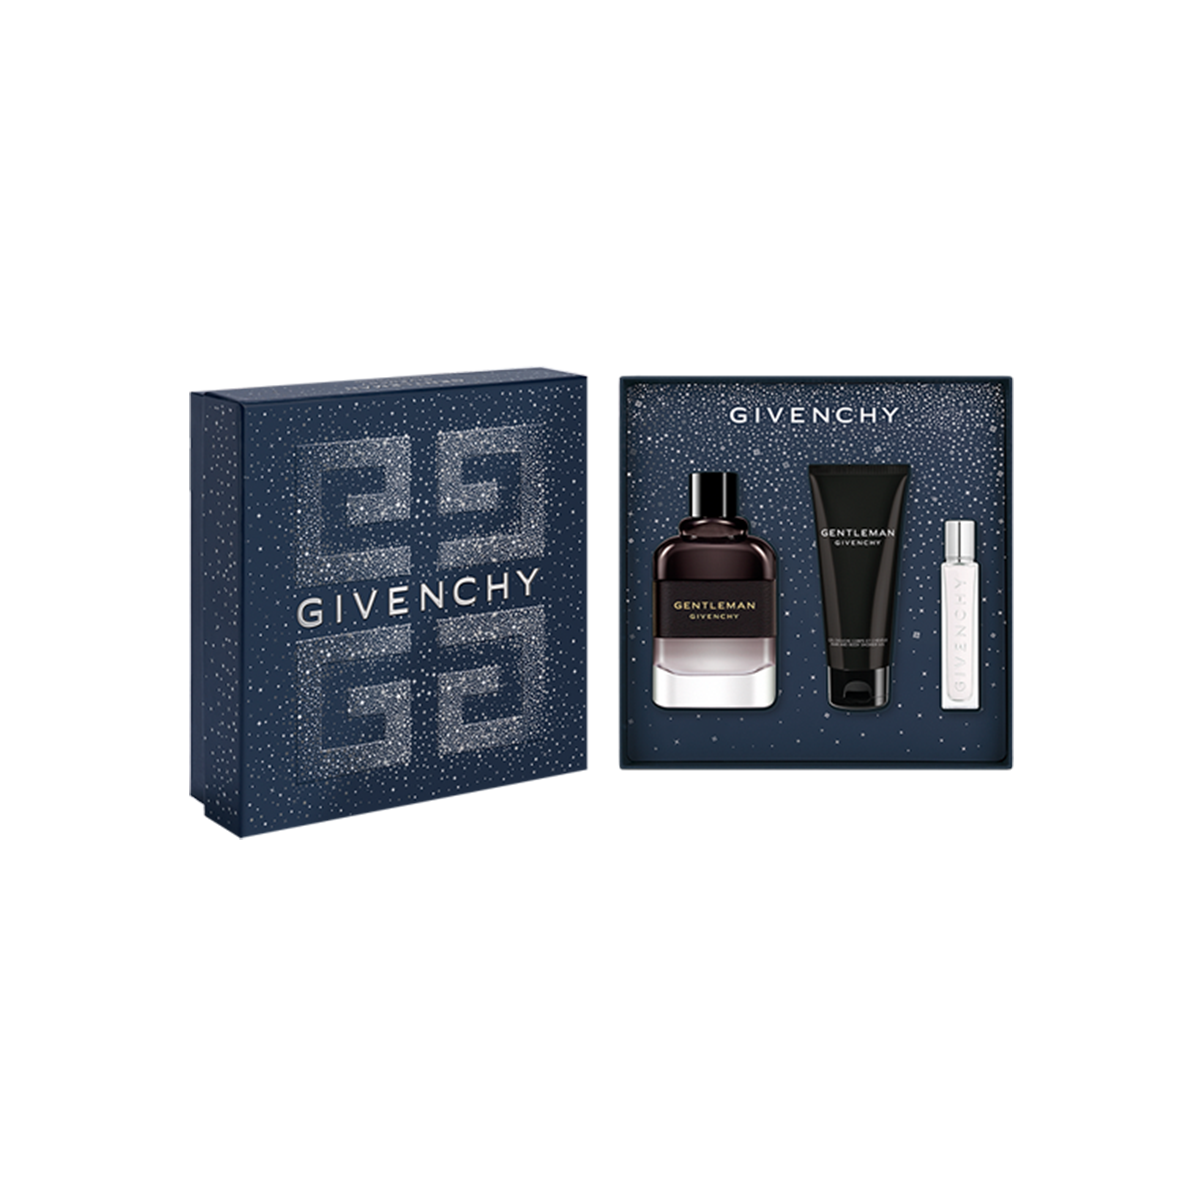 GENTLEMAN GIVENCHY - Holiday Gift Set